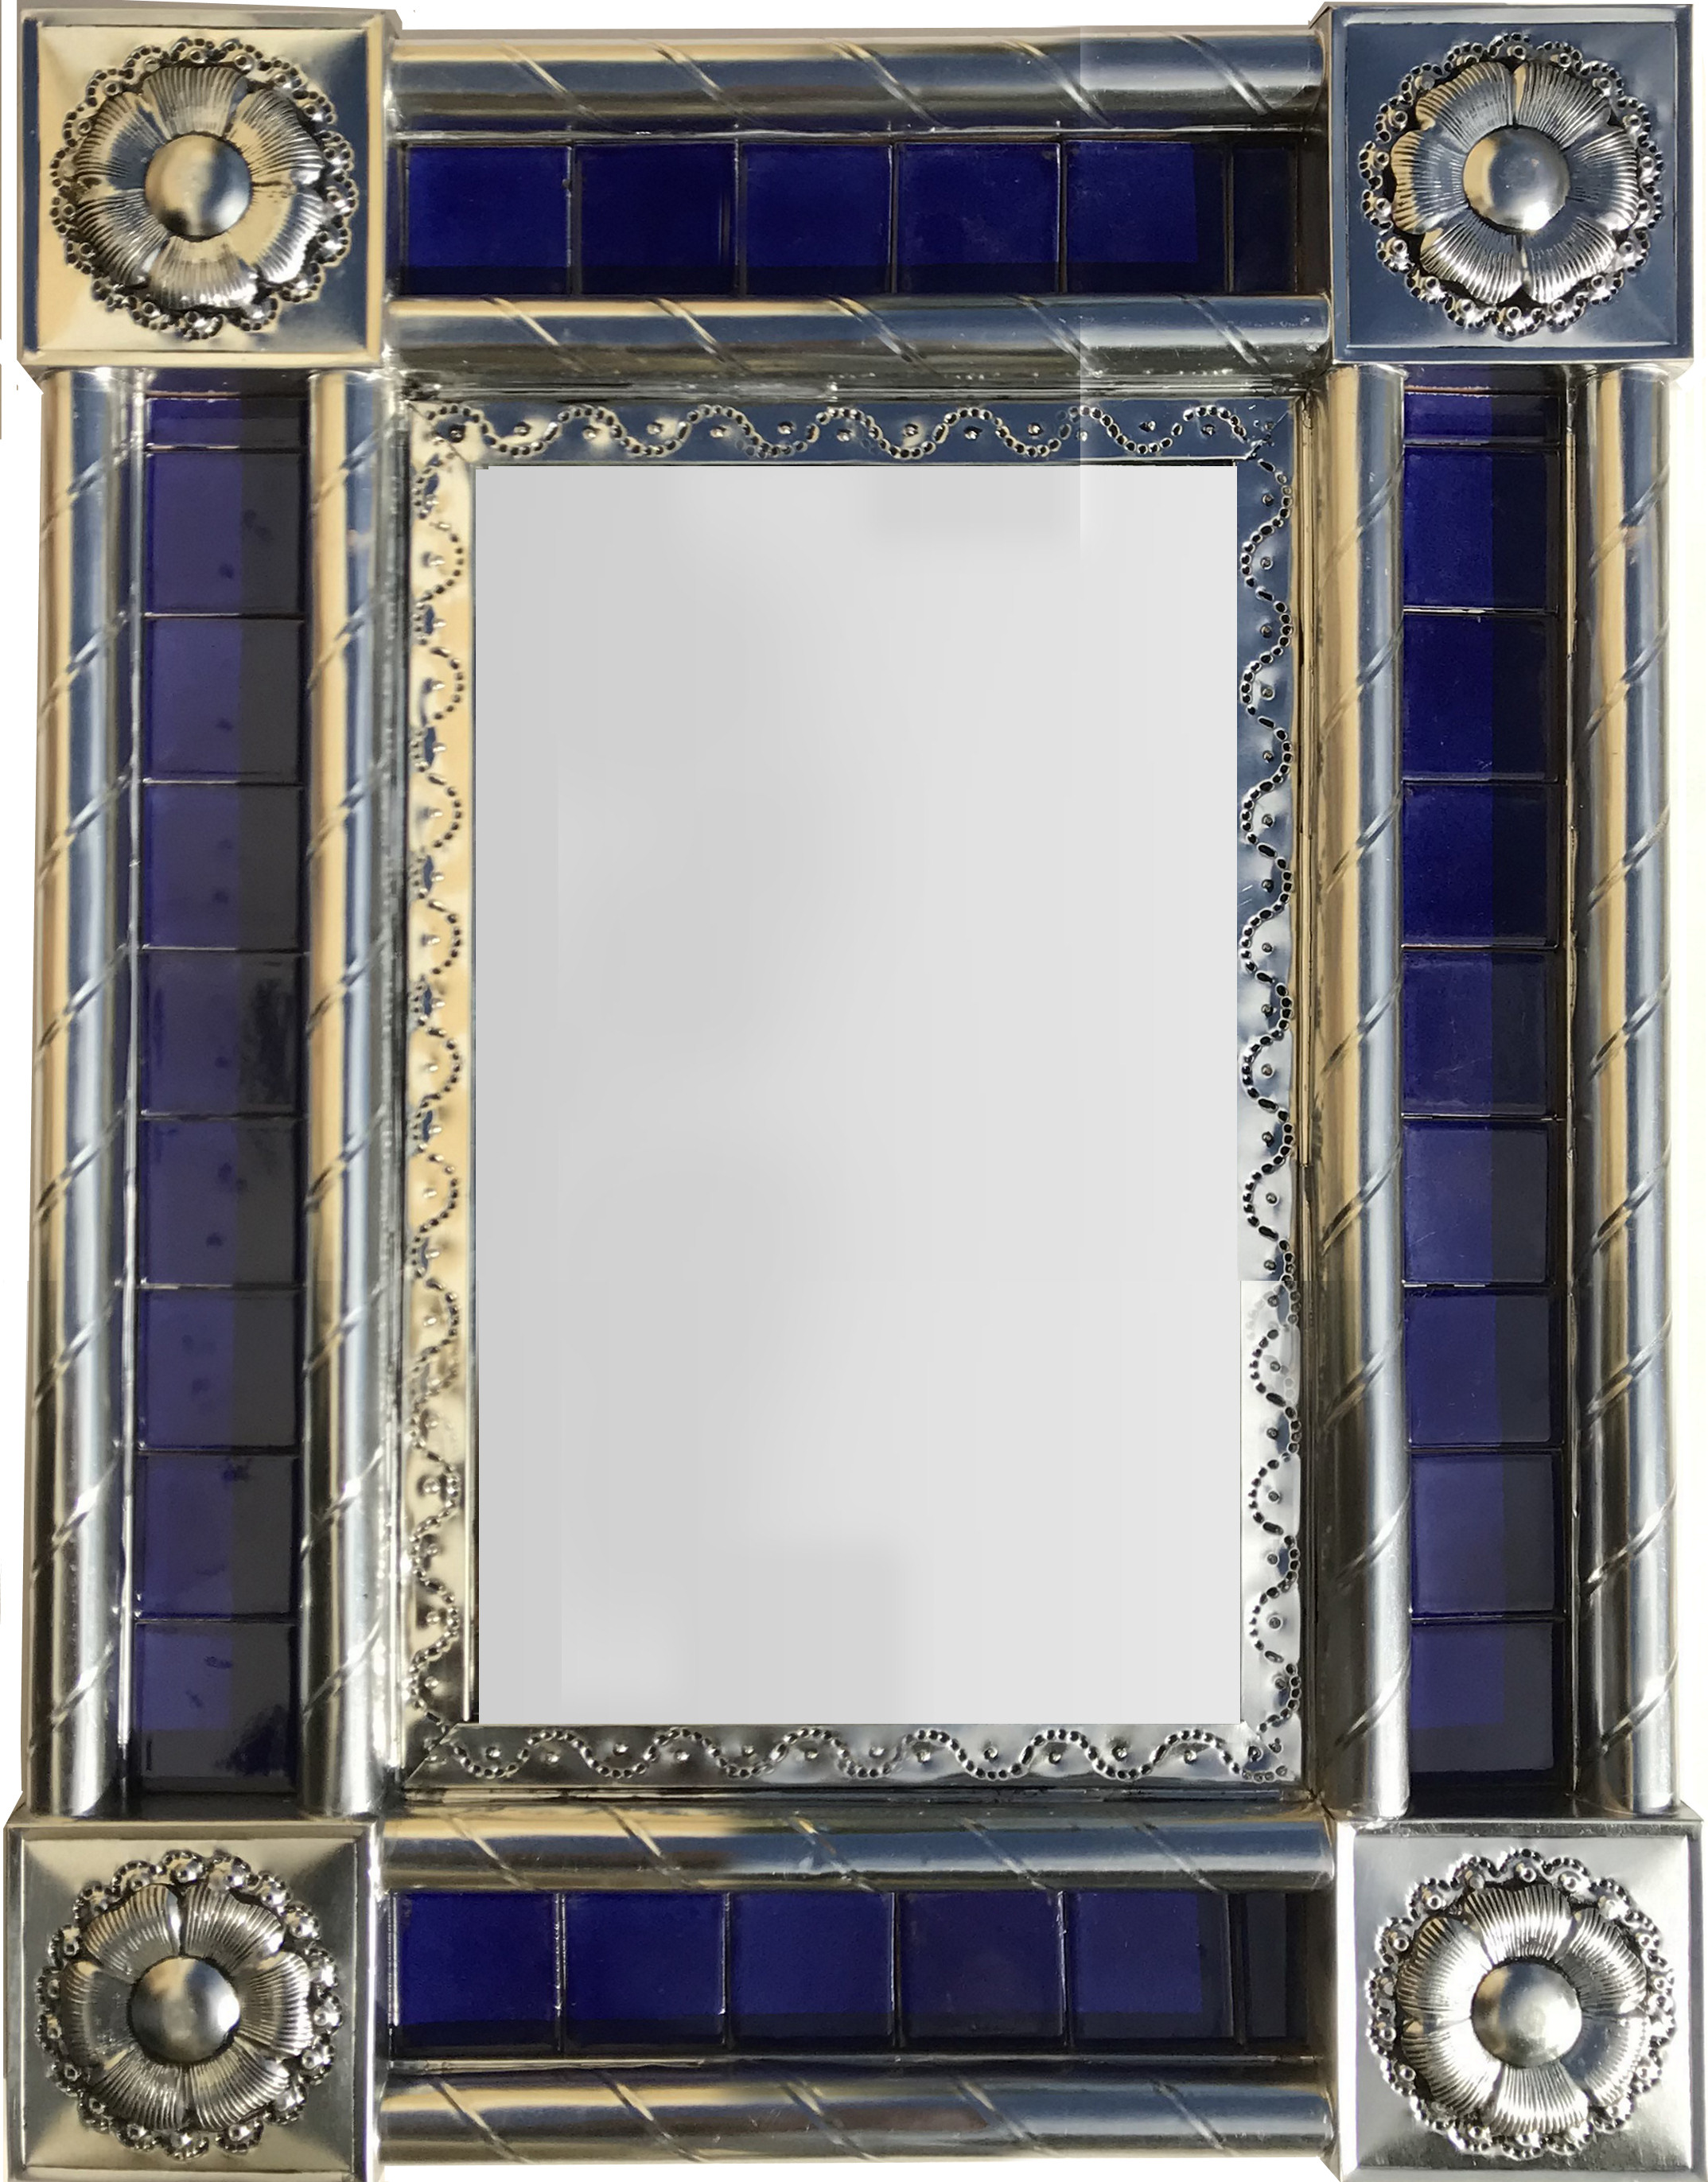 Post Small Silver Cobalt Tile Mexican Mirror